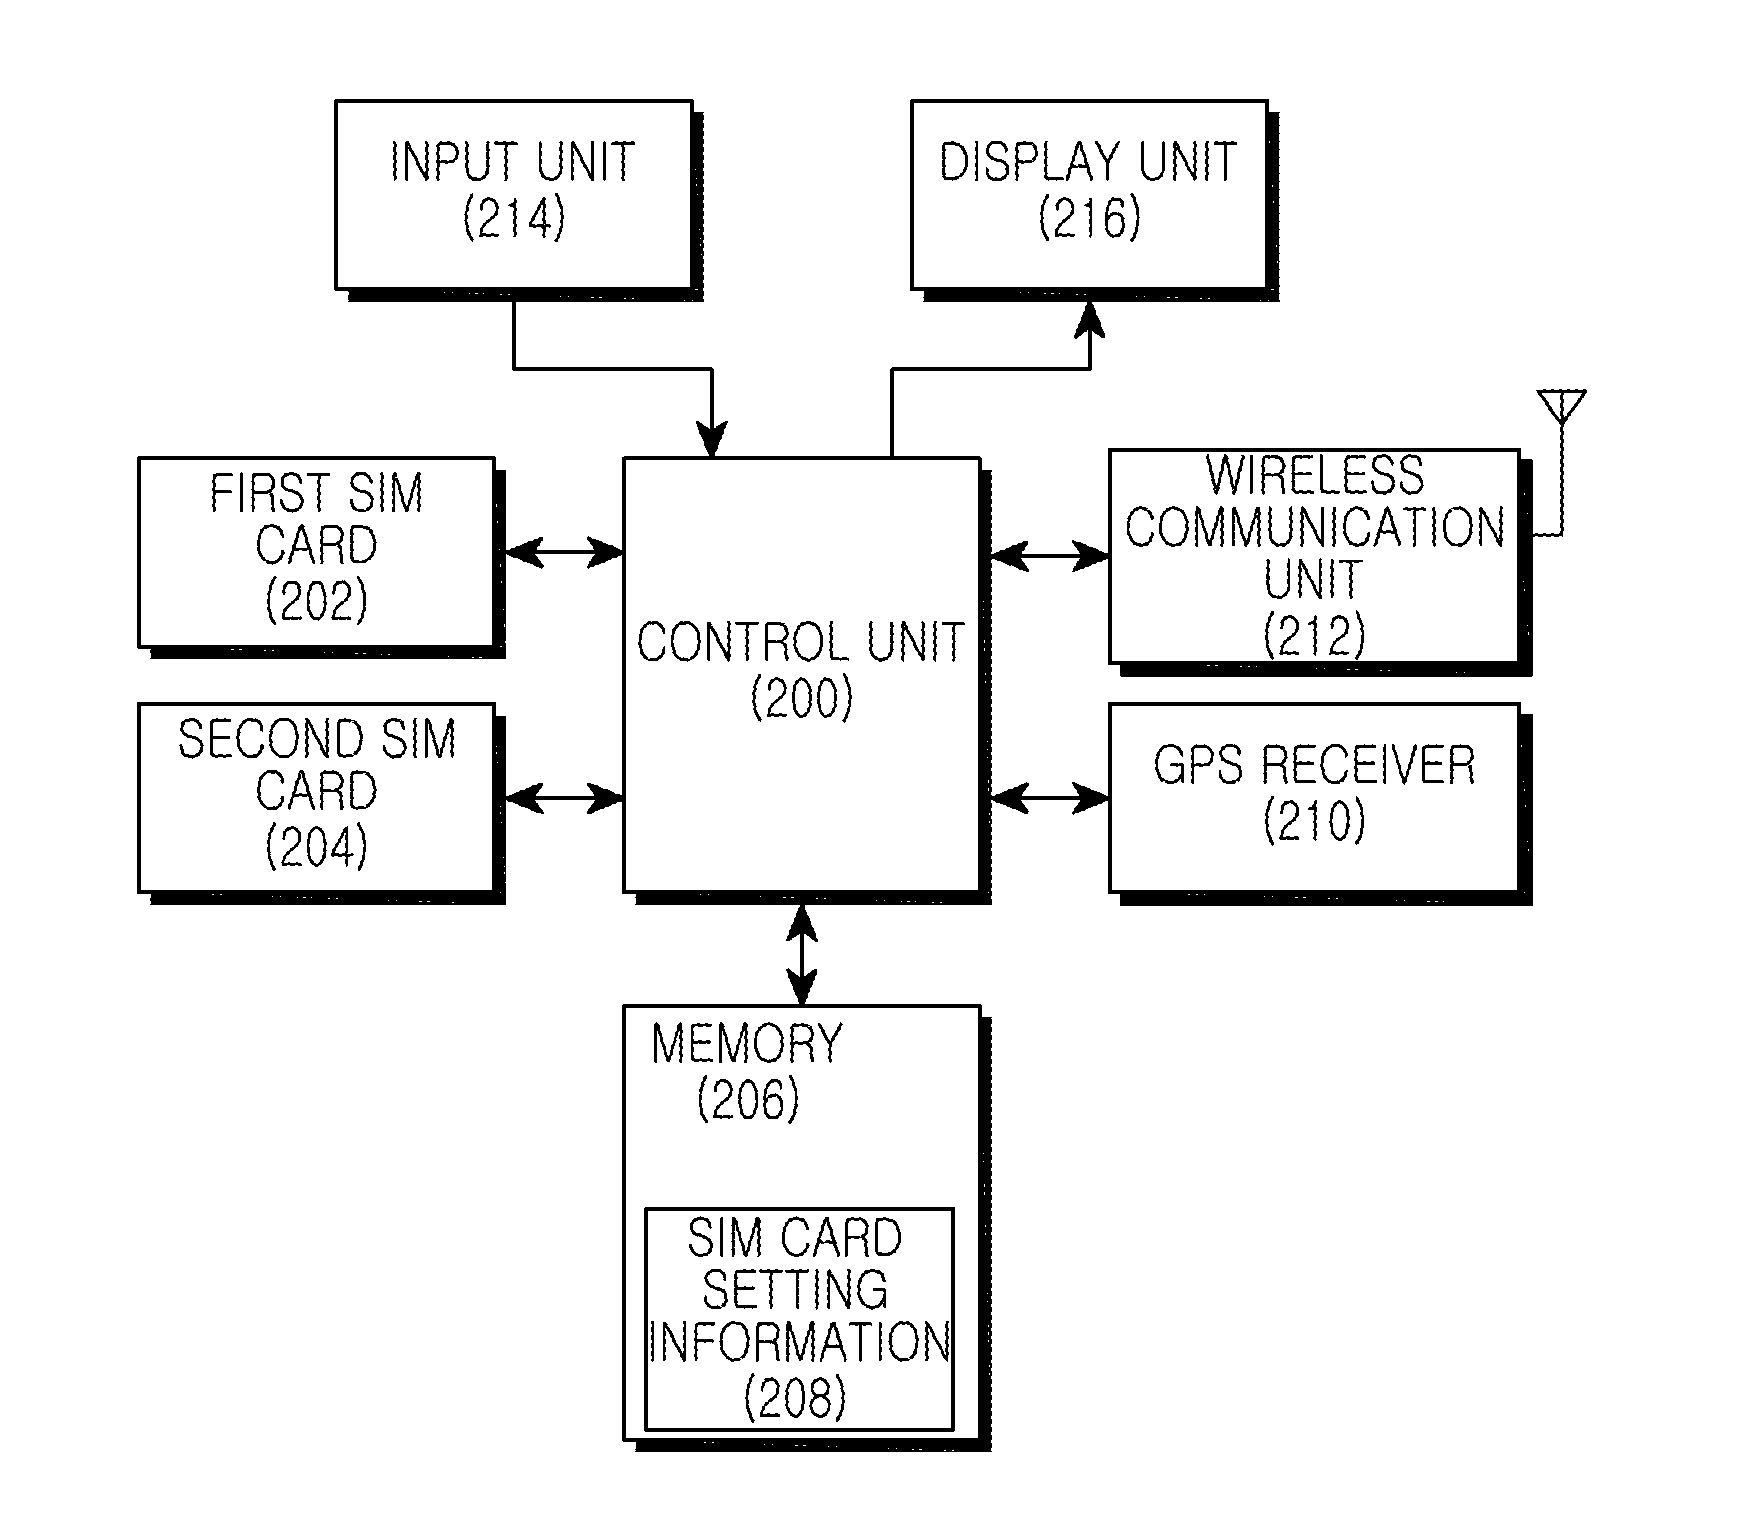 Apparatus and method for setting main sim card in dual sim card terminals